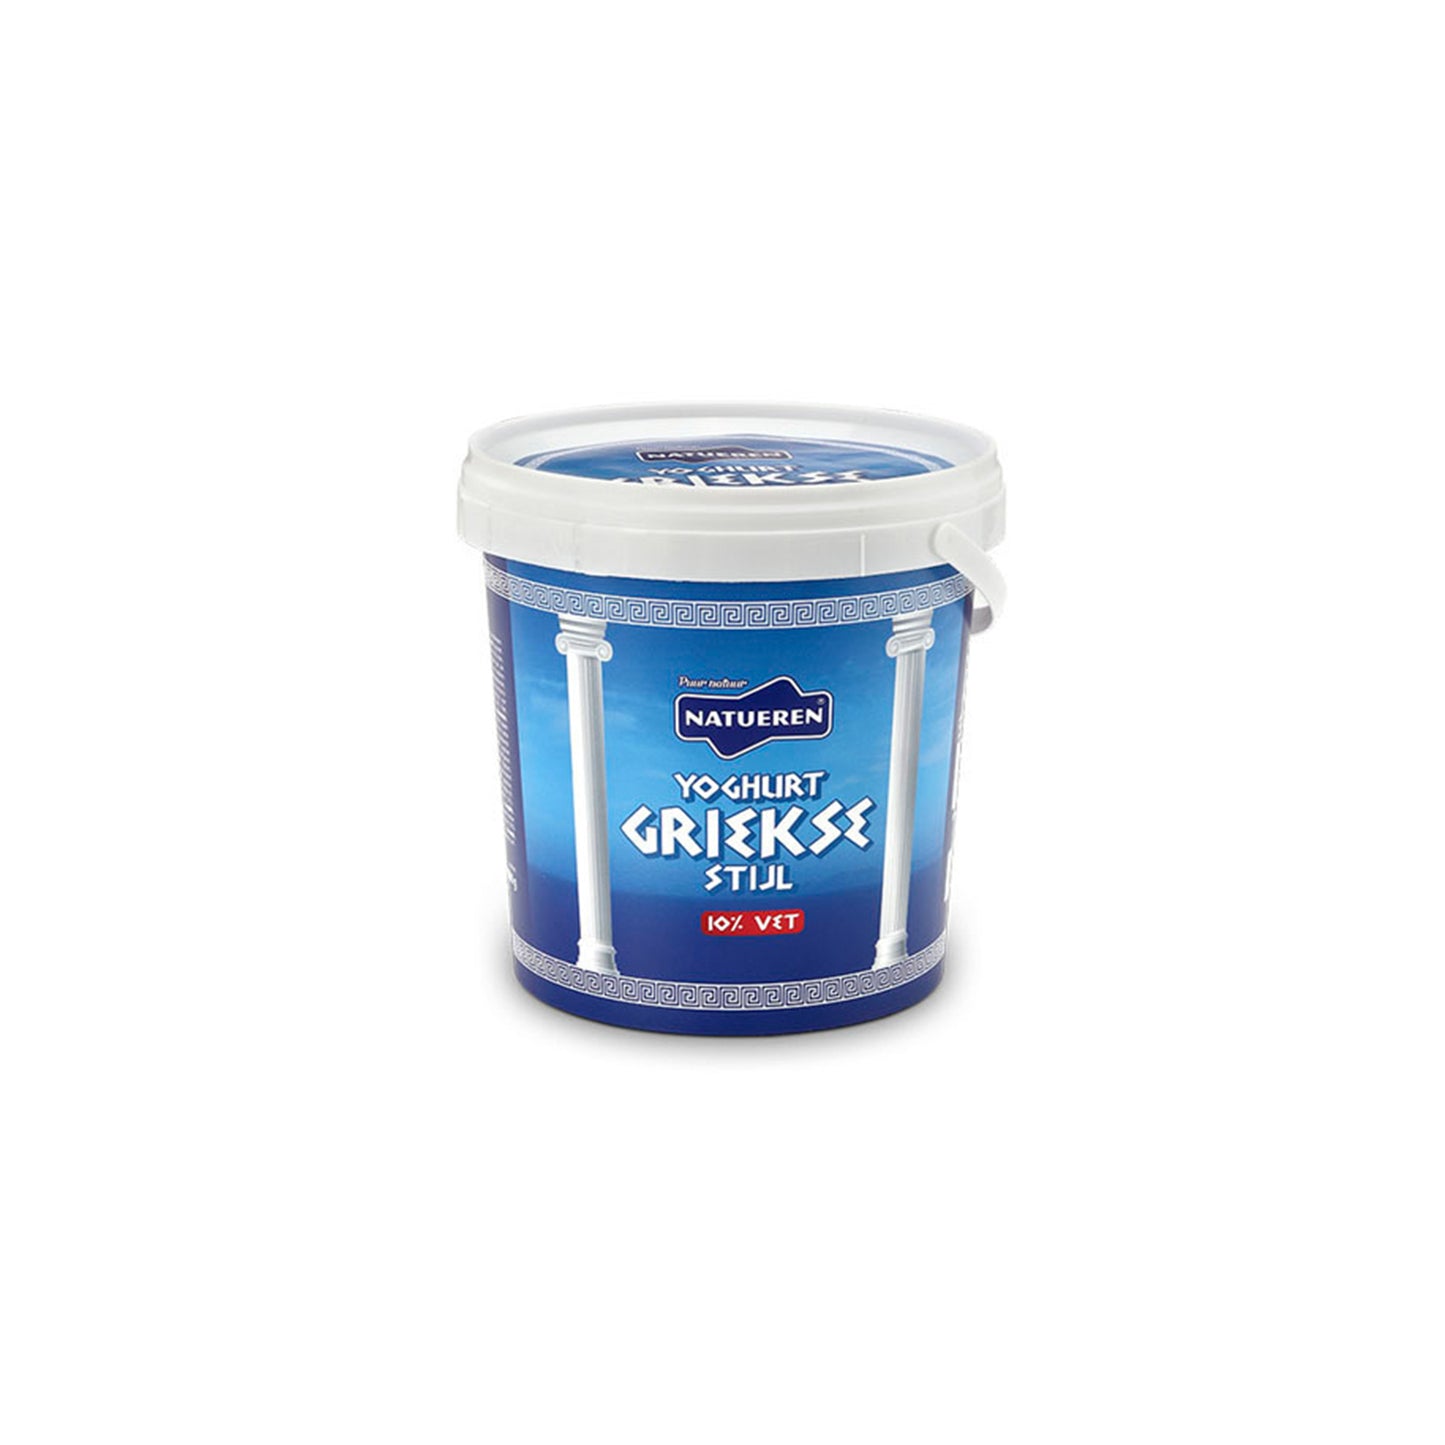 Natueren Yoghurt Griekse Style 10%